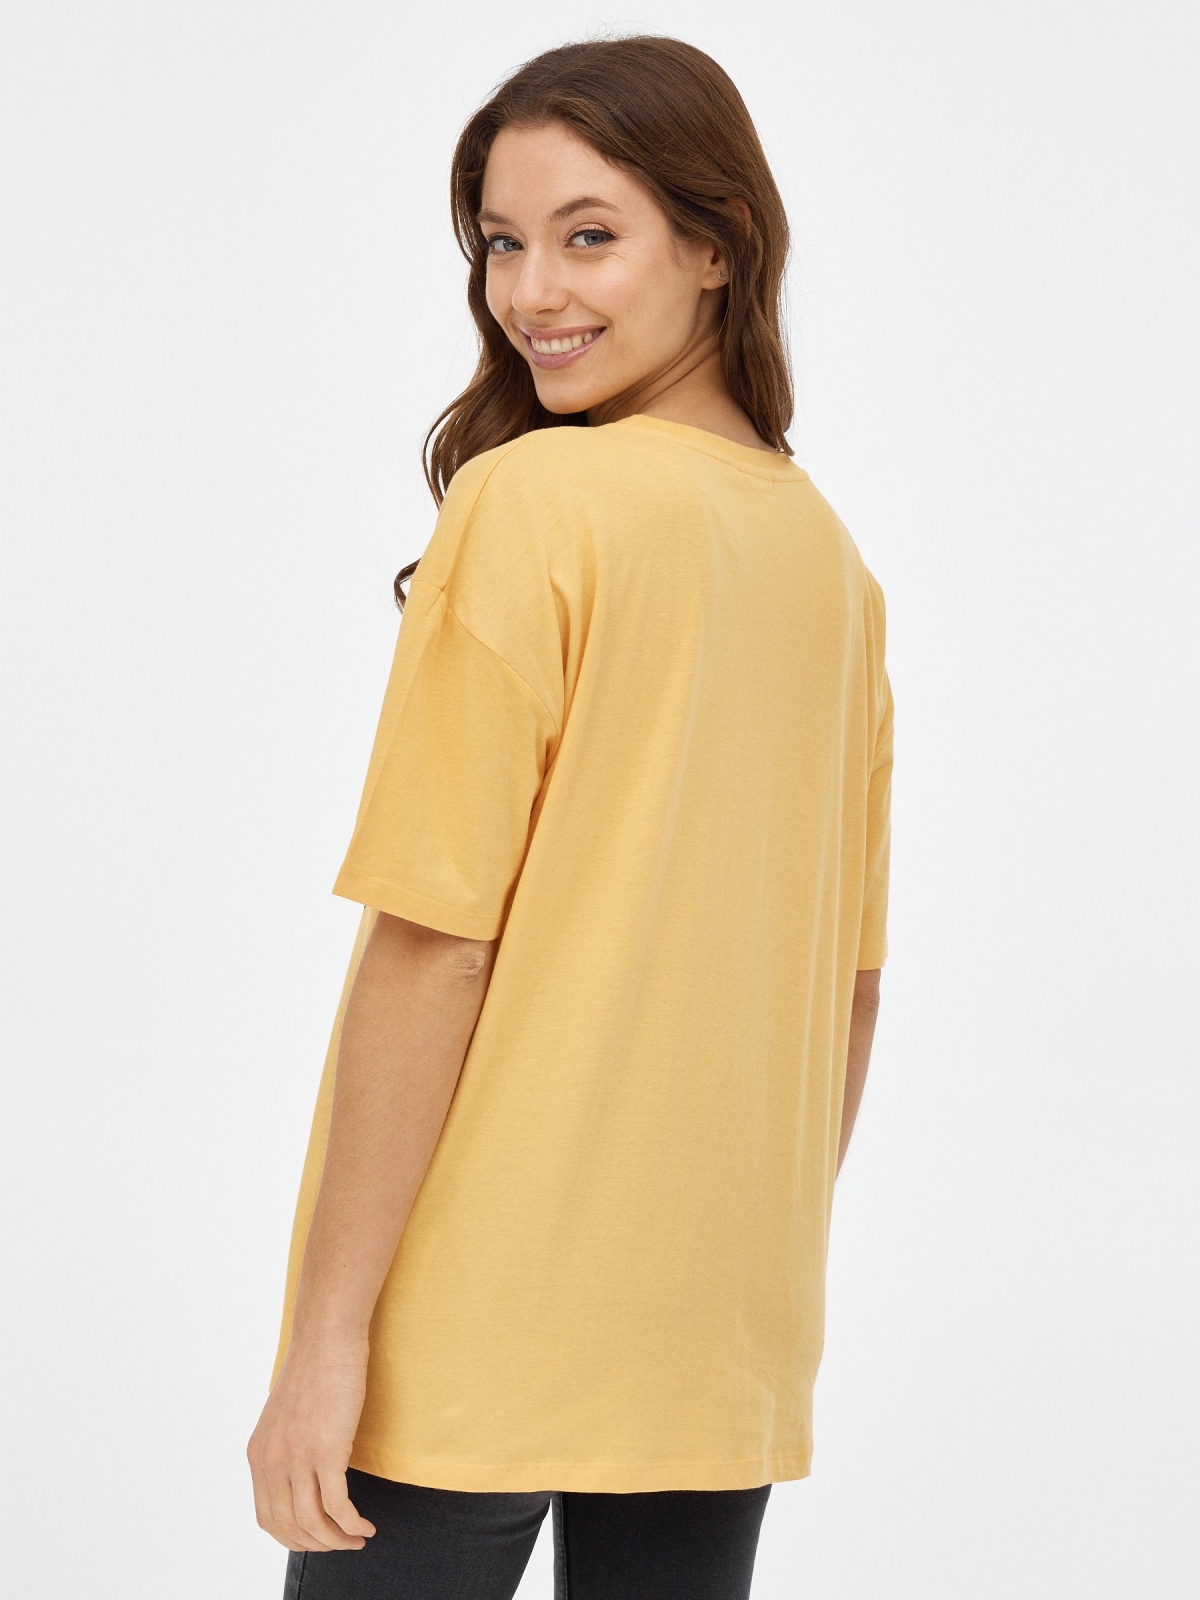 Camiseta oversized Stitch amarillo pastel vista media trasera